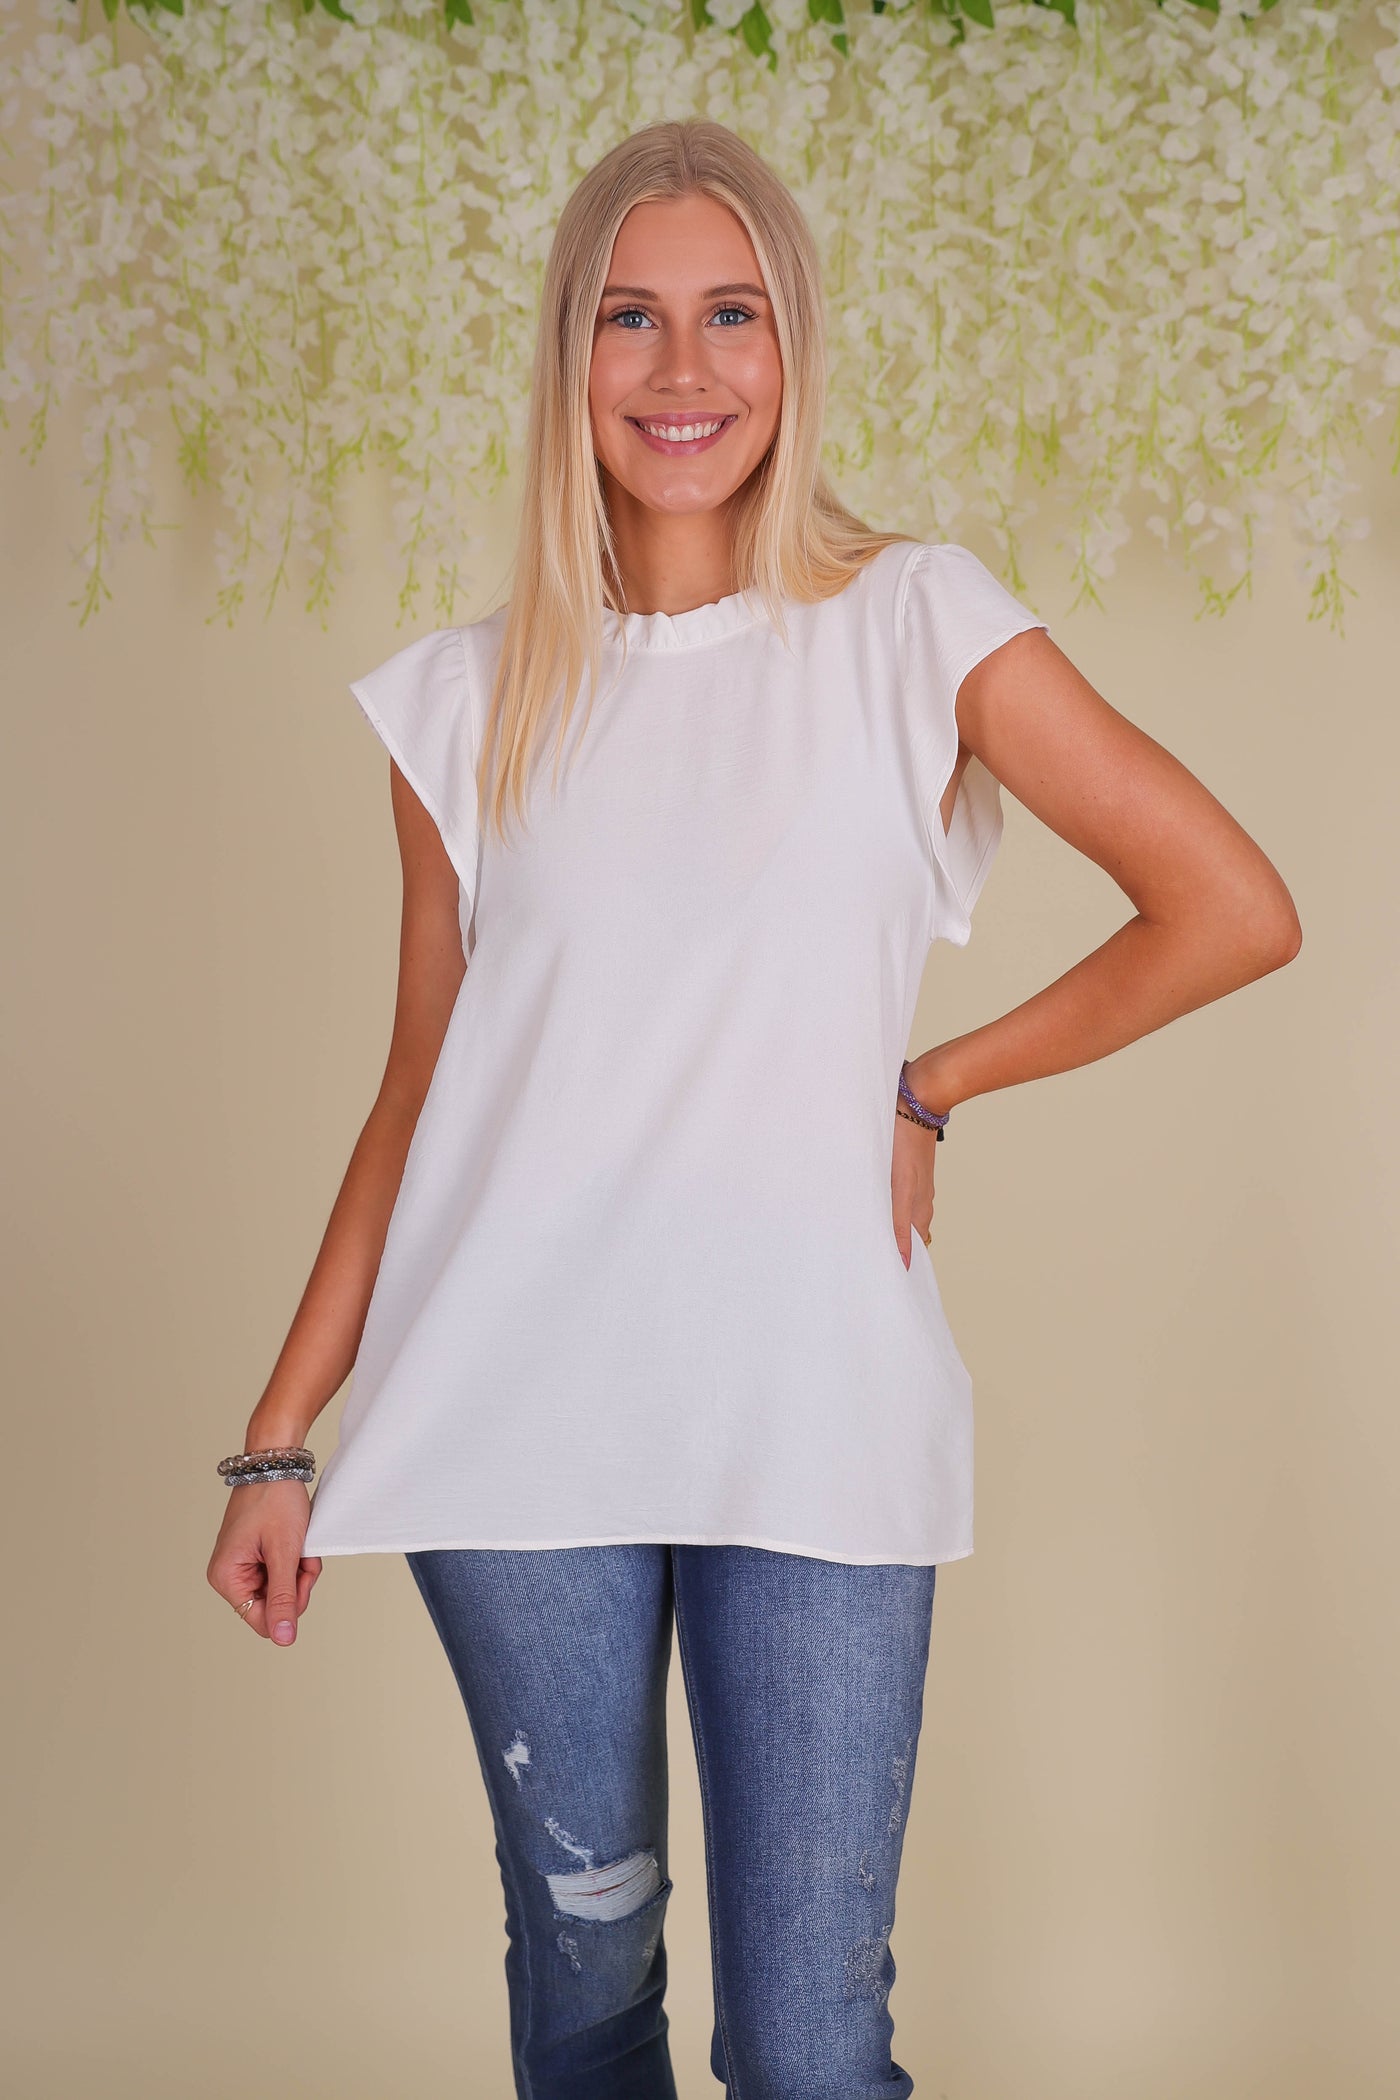 Women's White Ruffle Blouse- Women's Work Wear Tops- Women's Classic White Tops